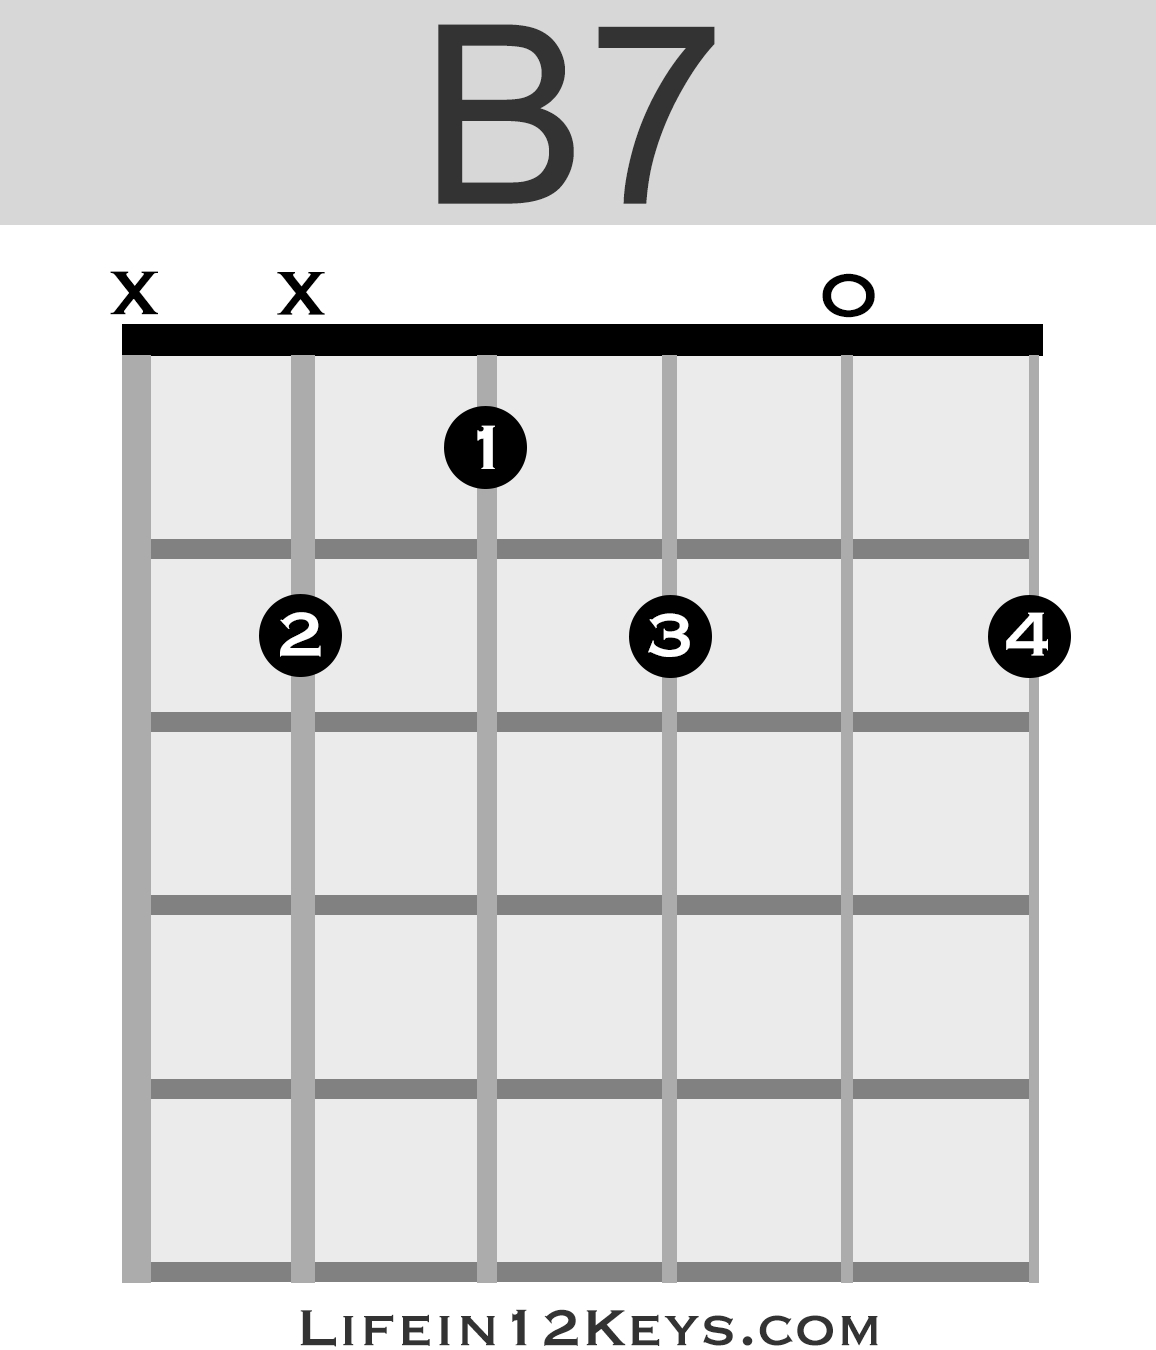 B7 Guitar Chord 20 Essential Guitar Chords For Beginners Life In 12 Keys